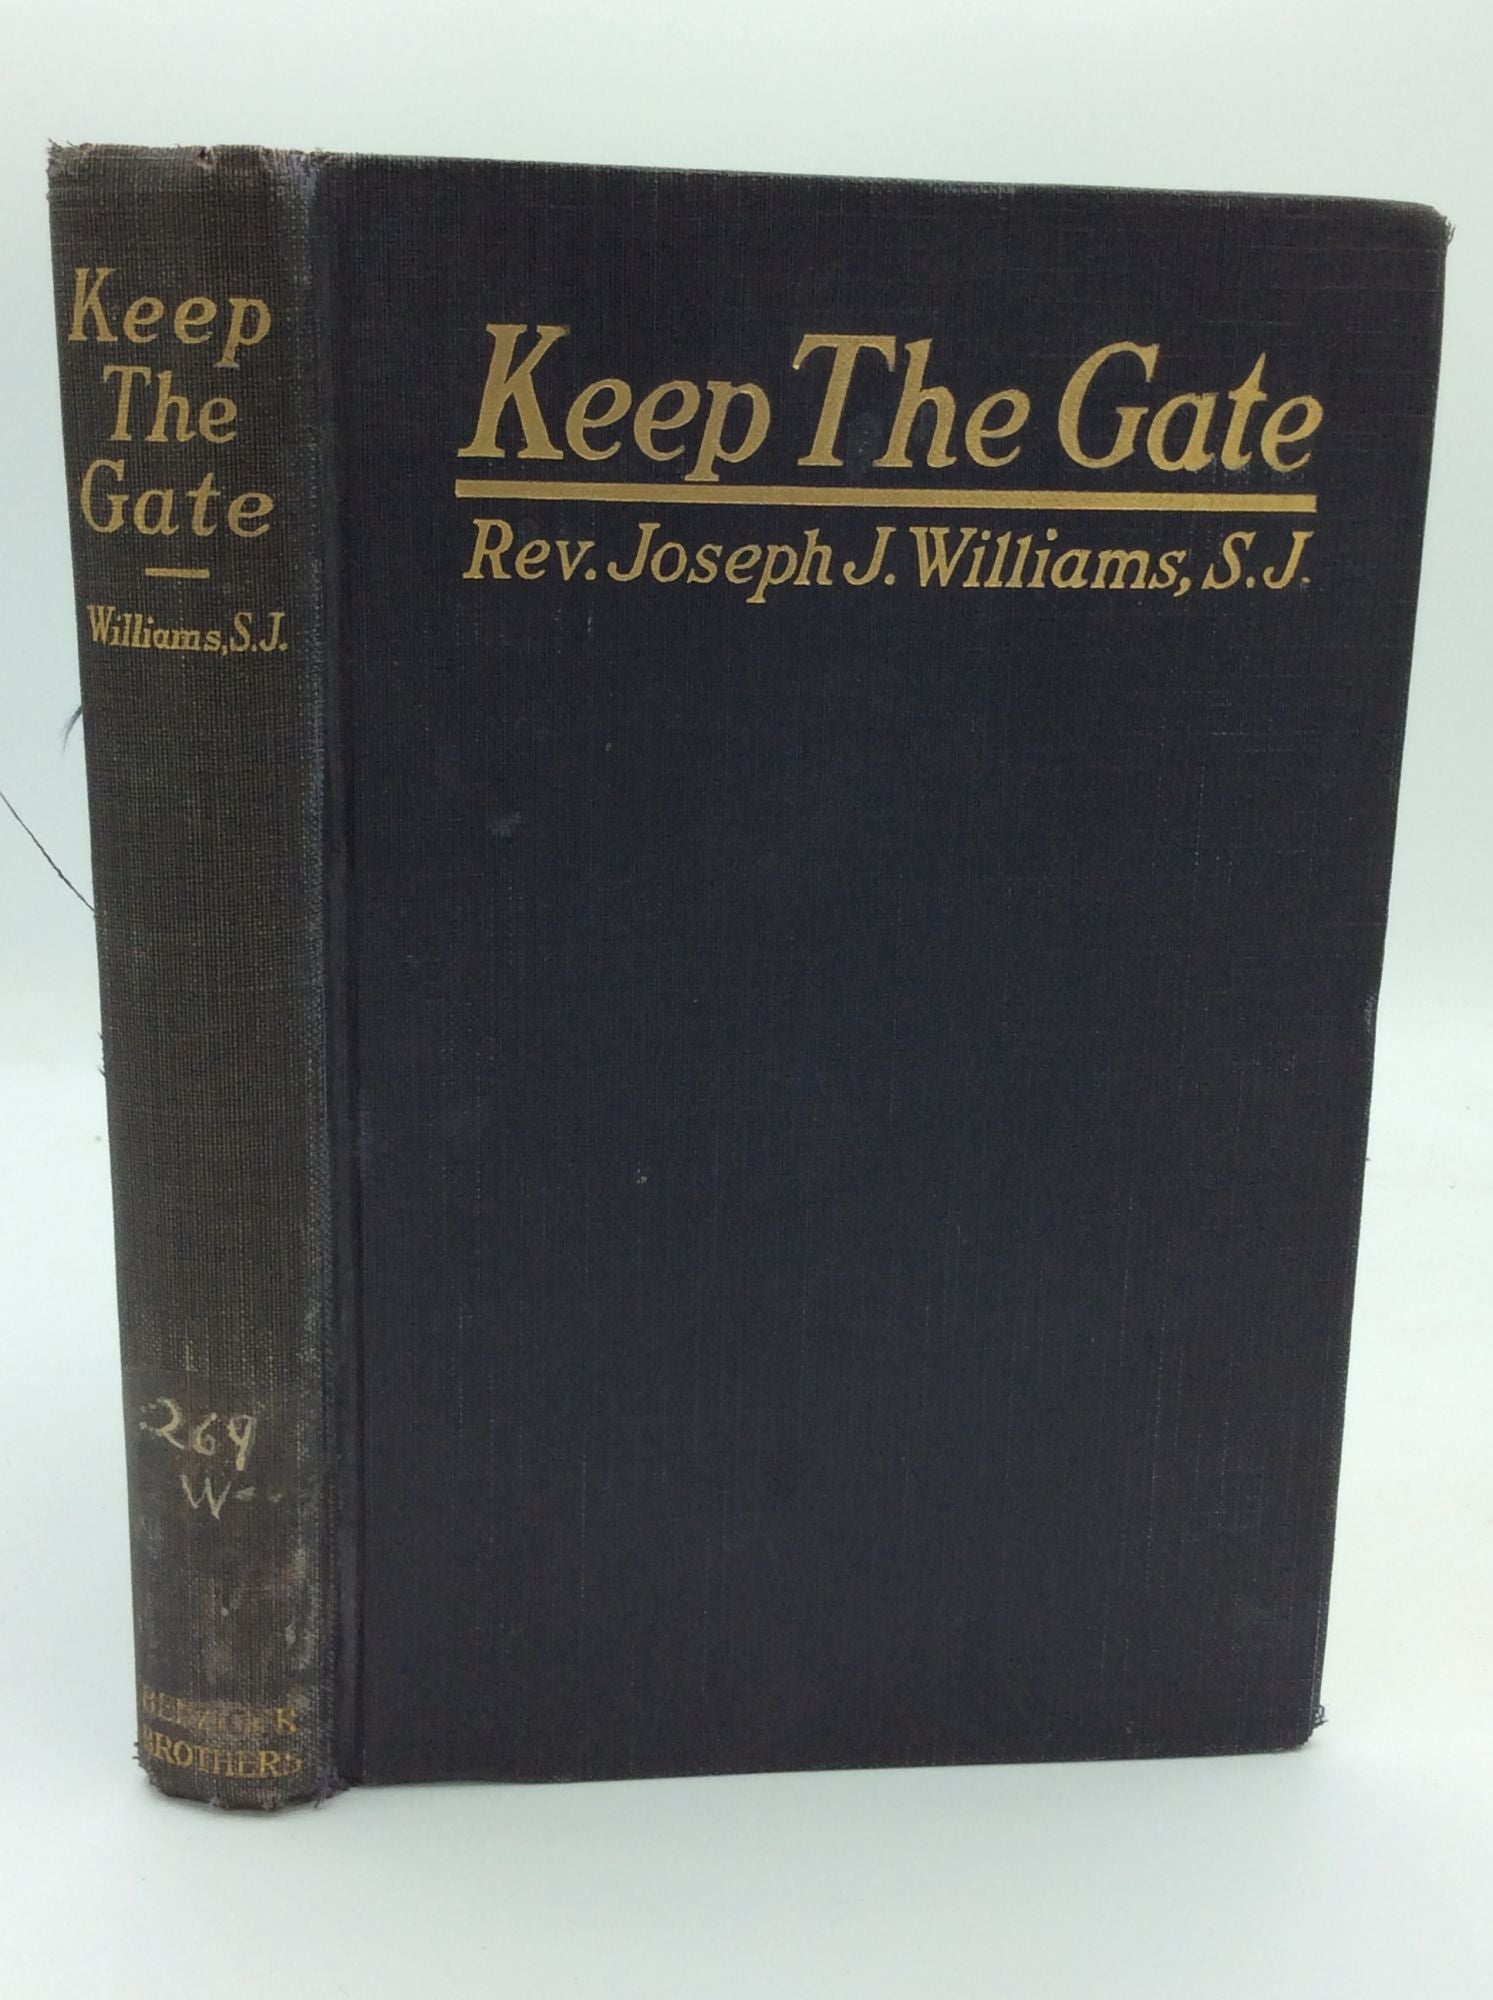 Rev. Joseph J. Williams, S.J. - Keep the Gate: Guarding the Soul Against Sin